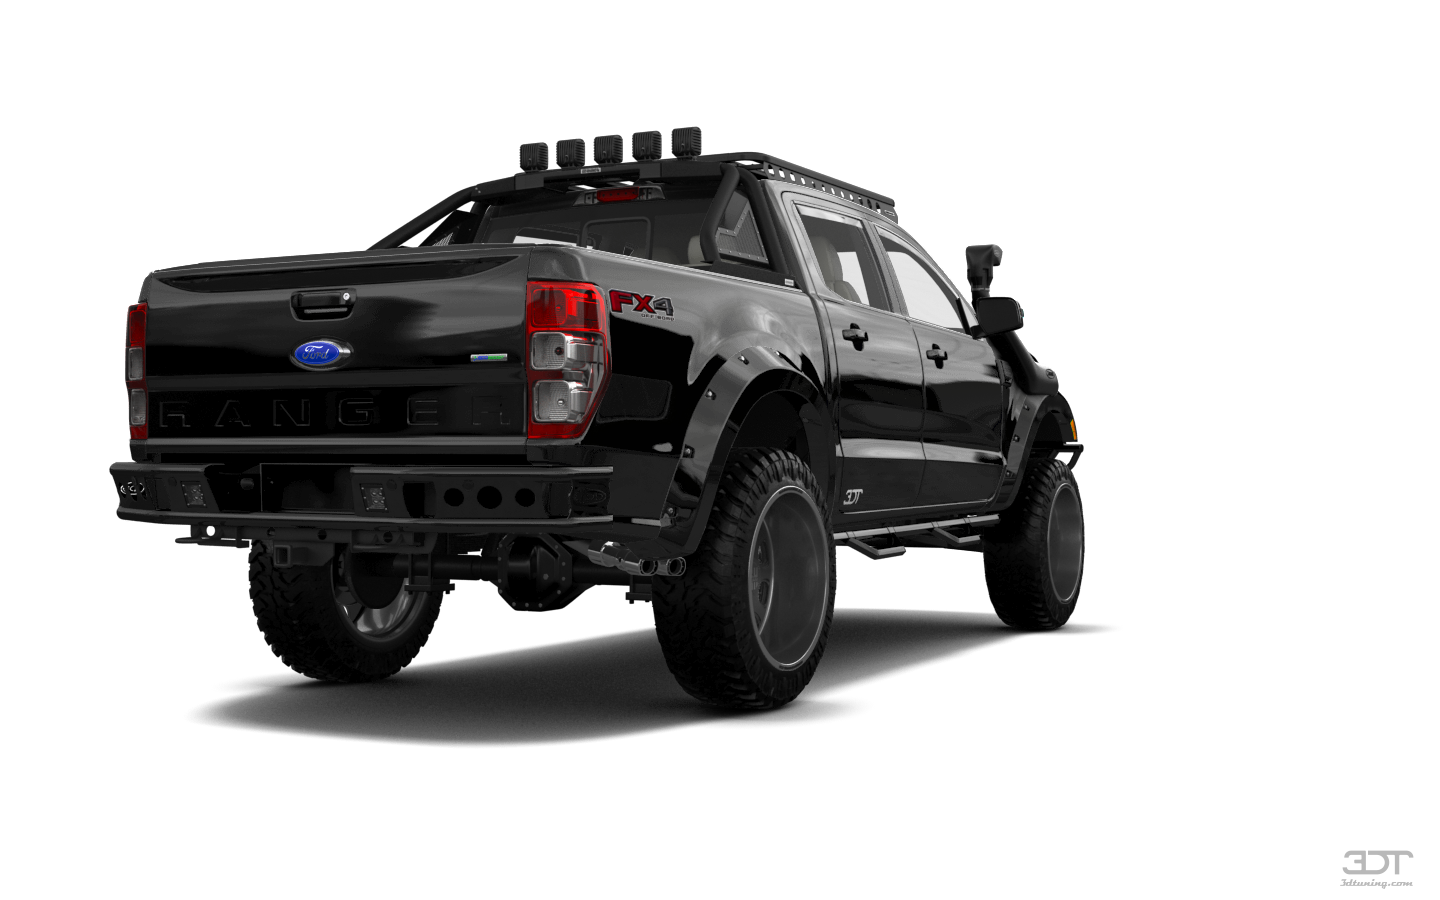 Ford Ranger 4 Door pickup truck 2019 tuning